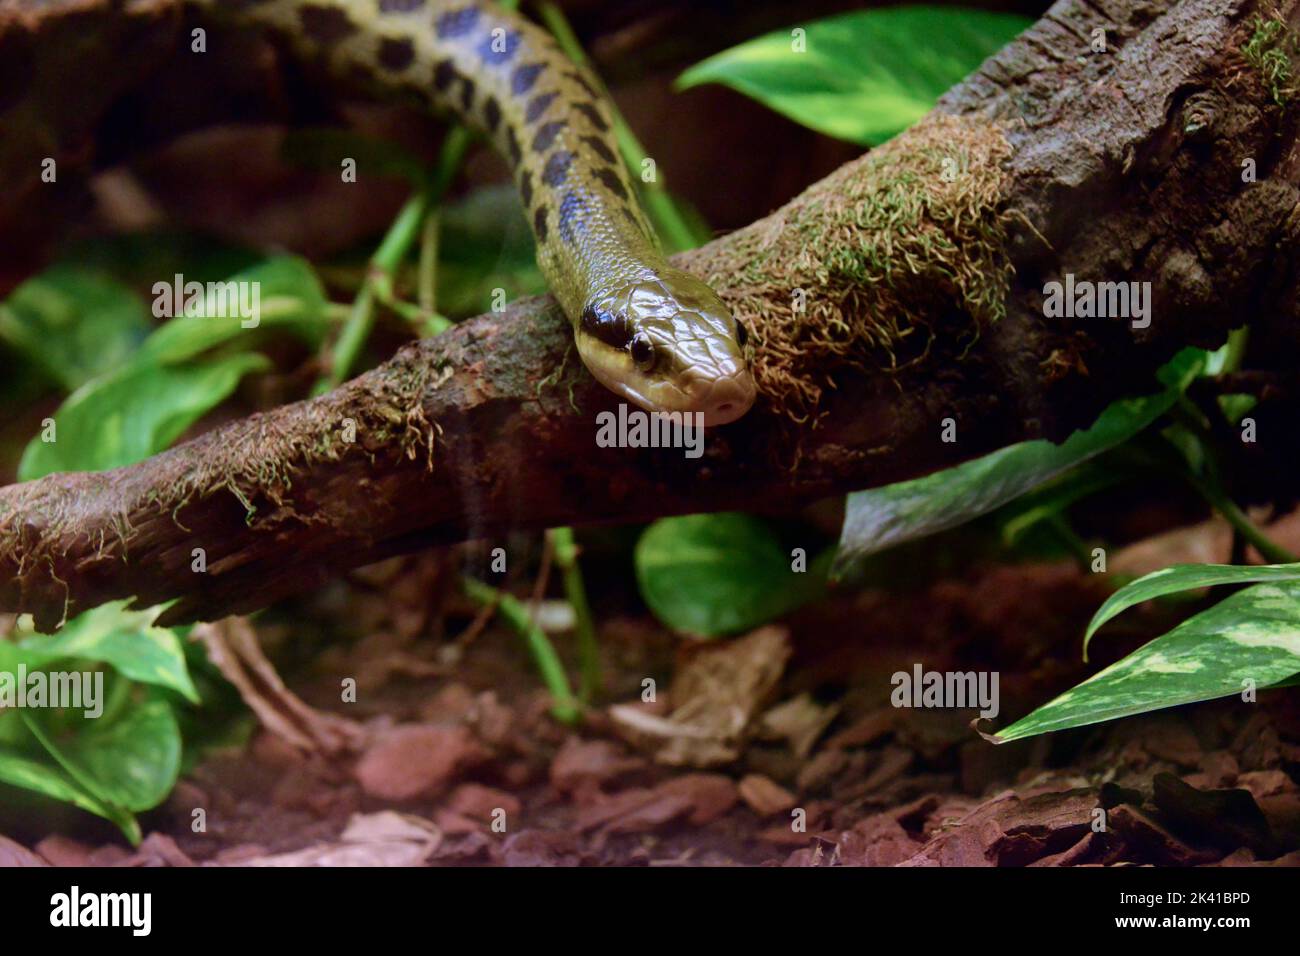 Cámara frente a serpiente fotografías e imágenes de alta resolución - Alamy